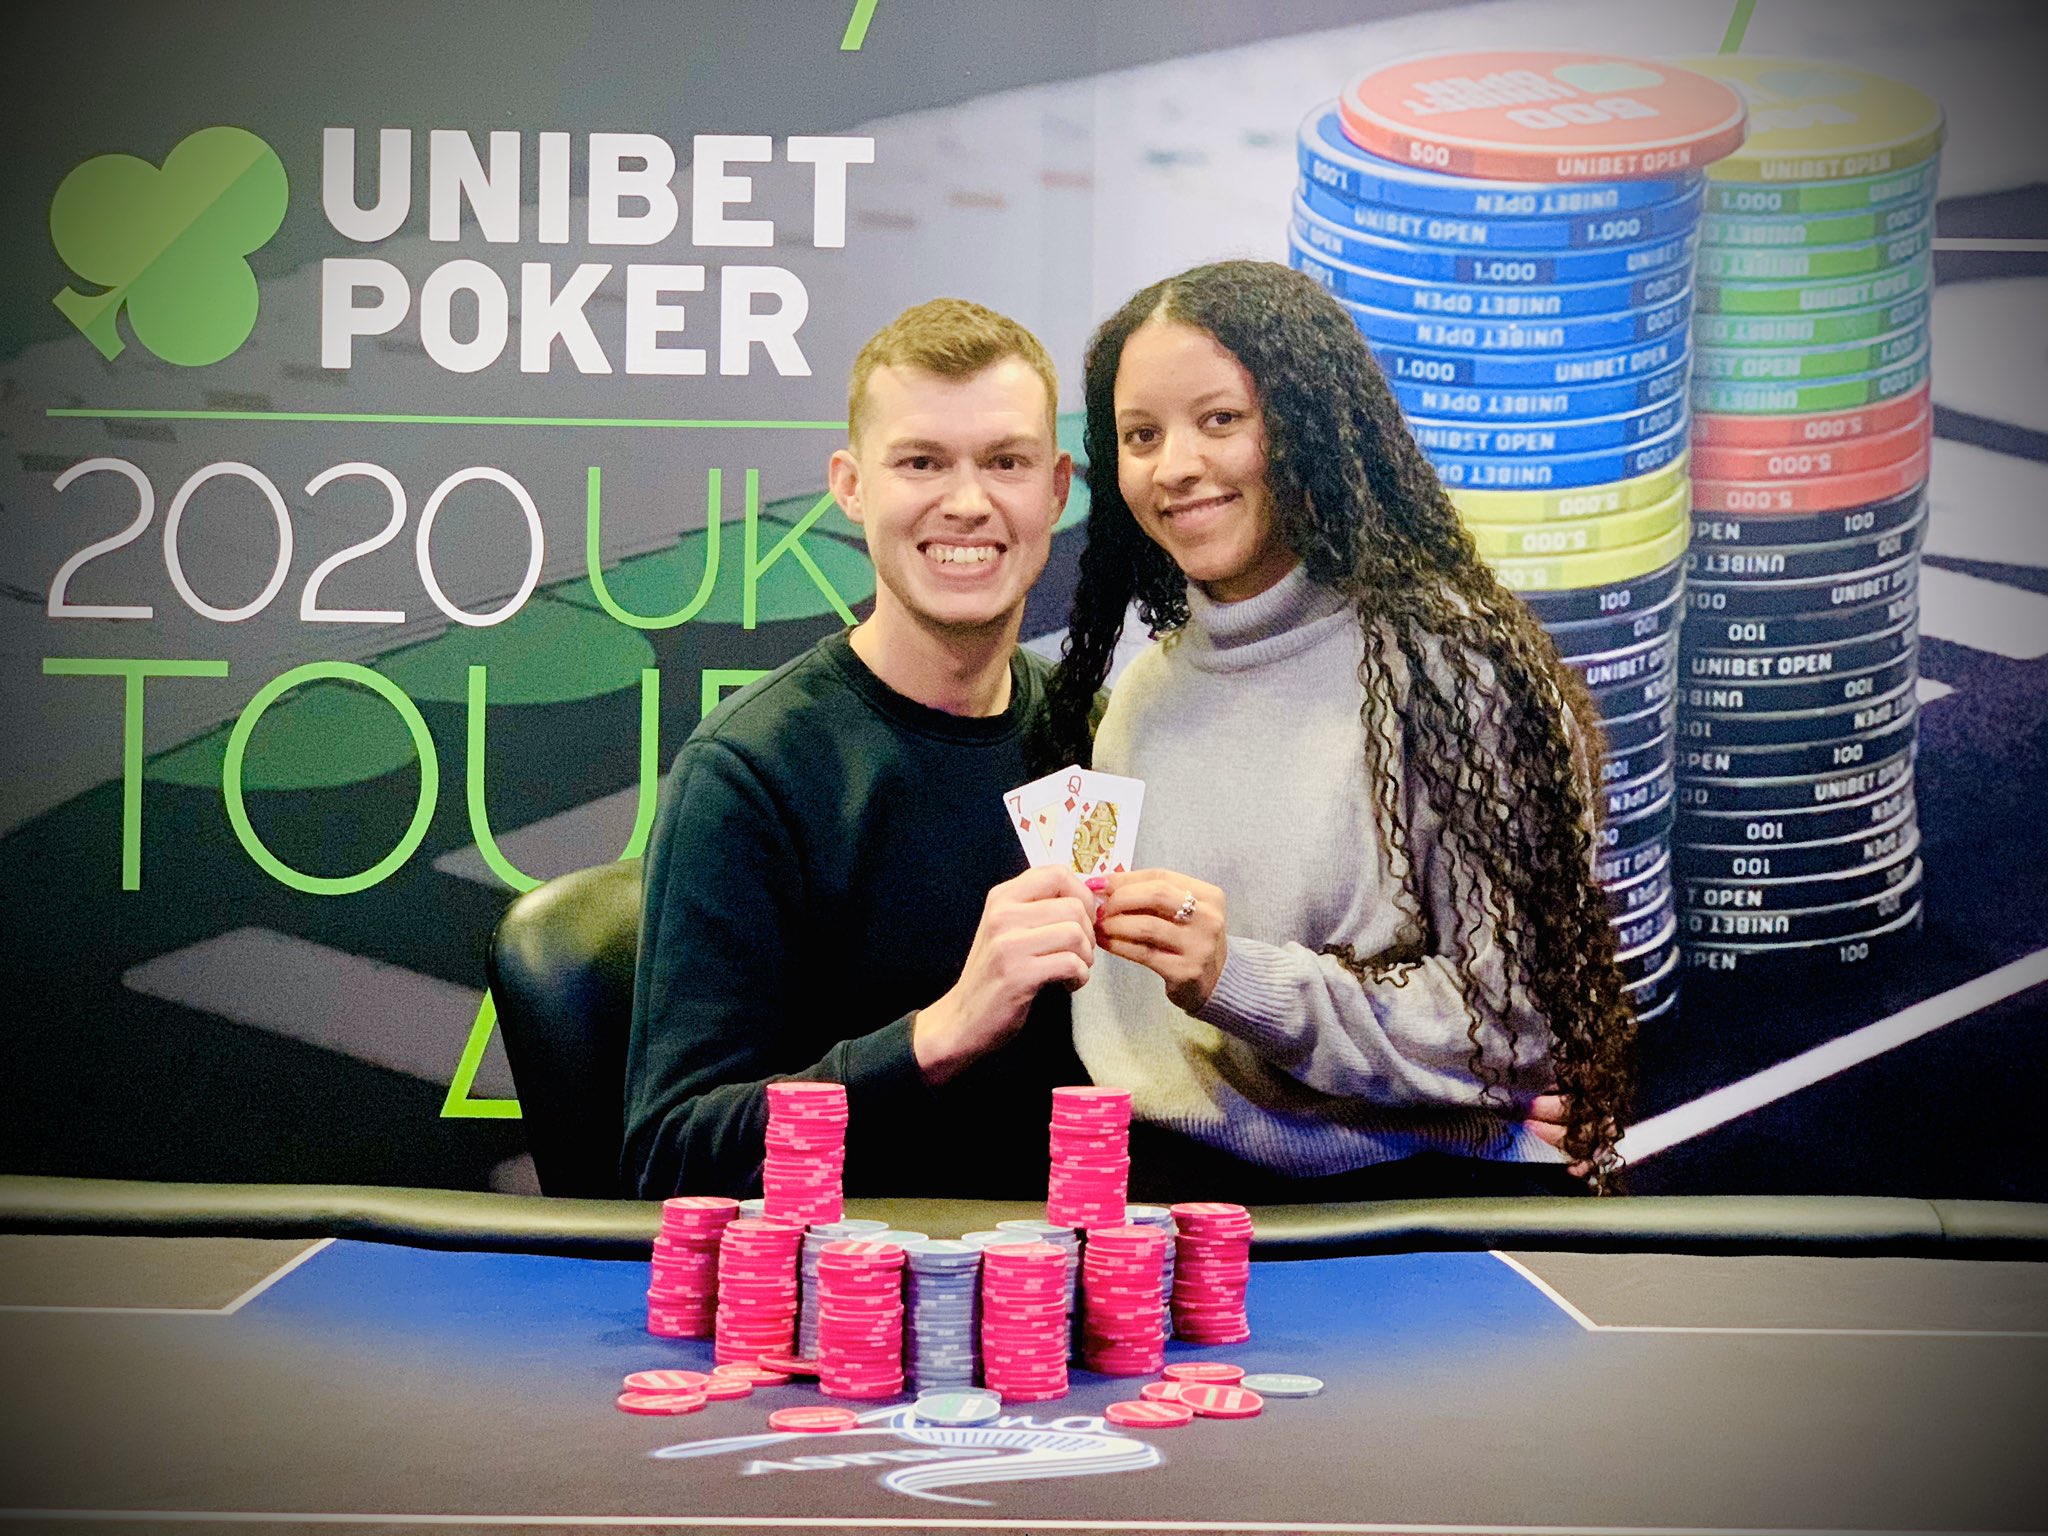 Record-Breaking Event Kicks Off 2020 Unibet UK Poker Tour